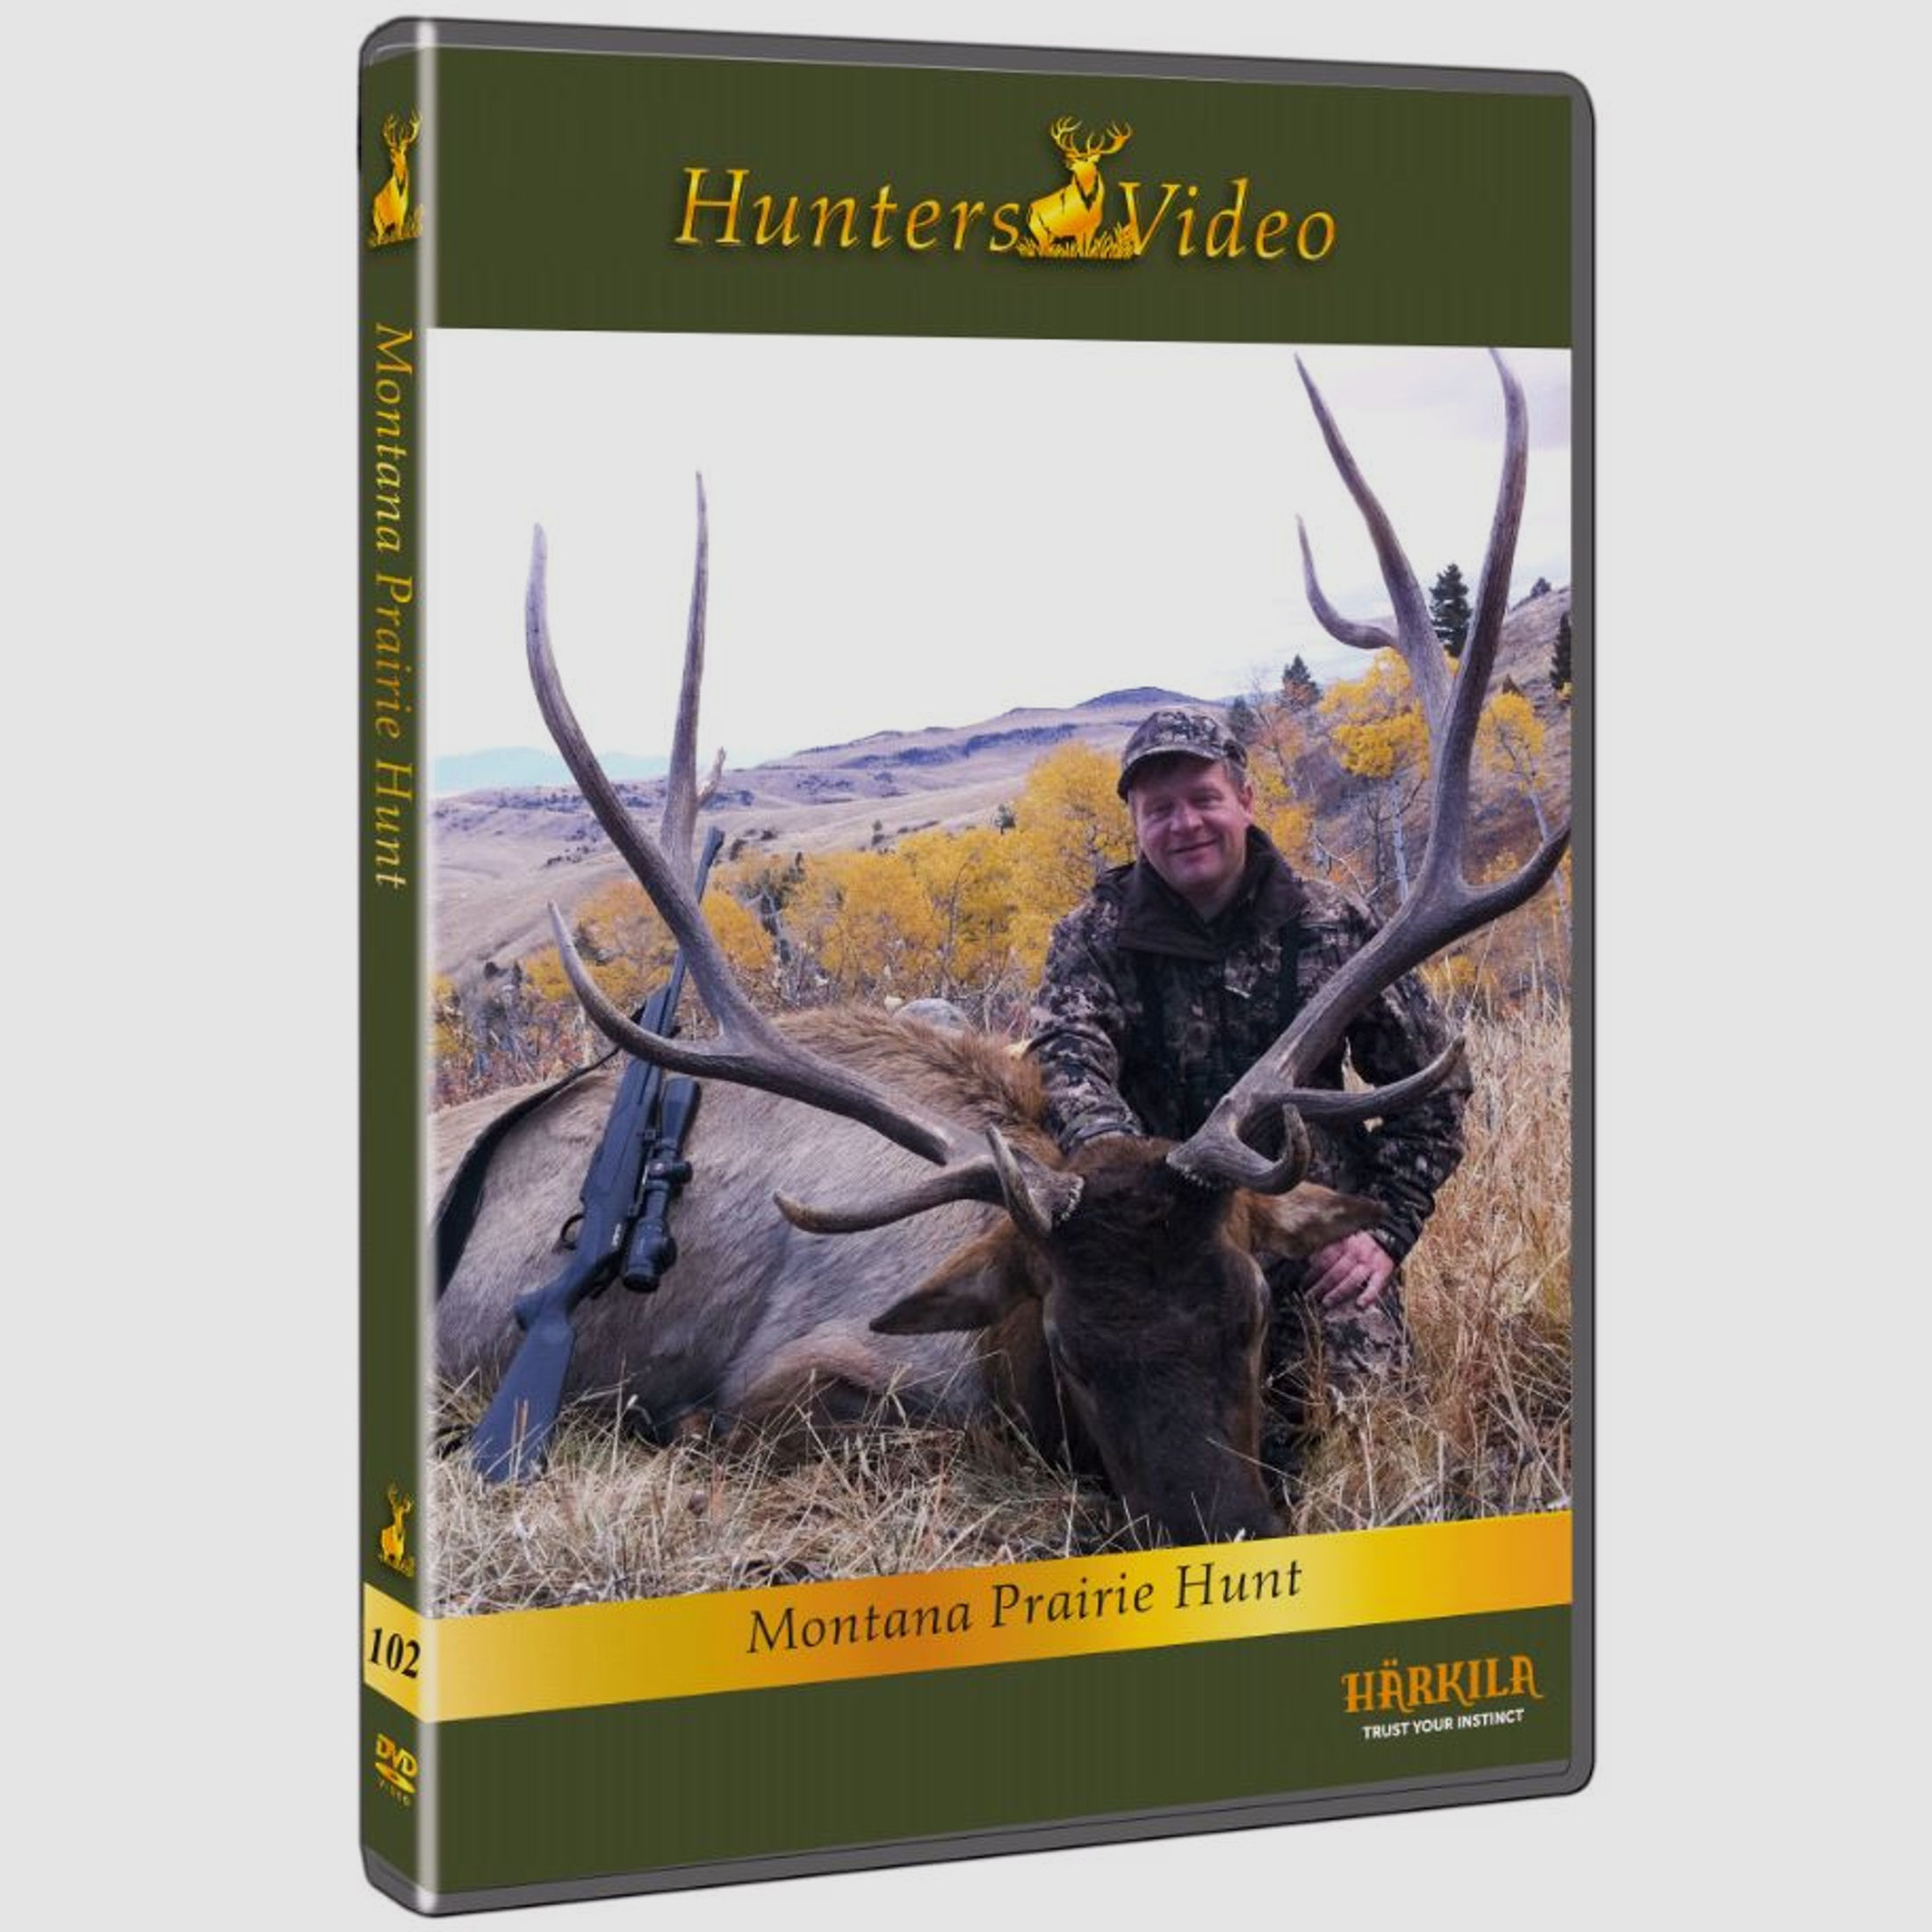 Hunters Video - DVD Montana Prairie Hunt